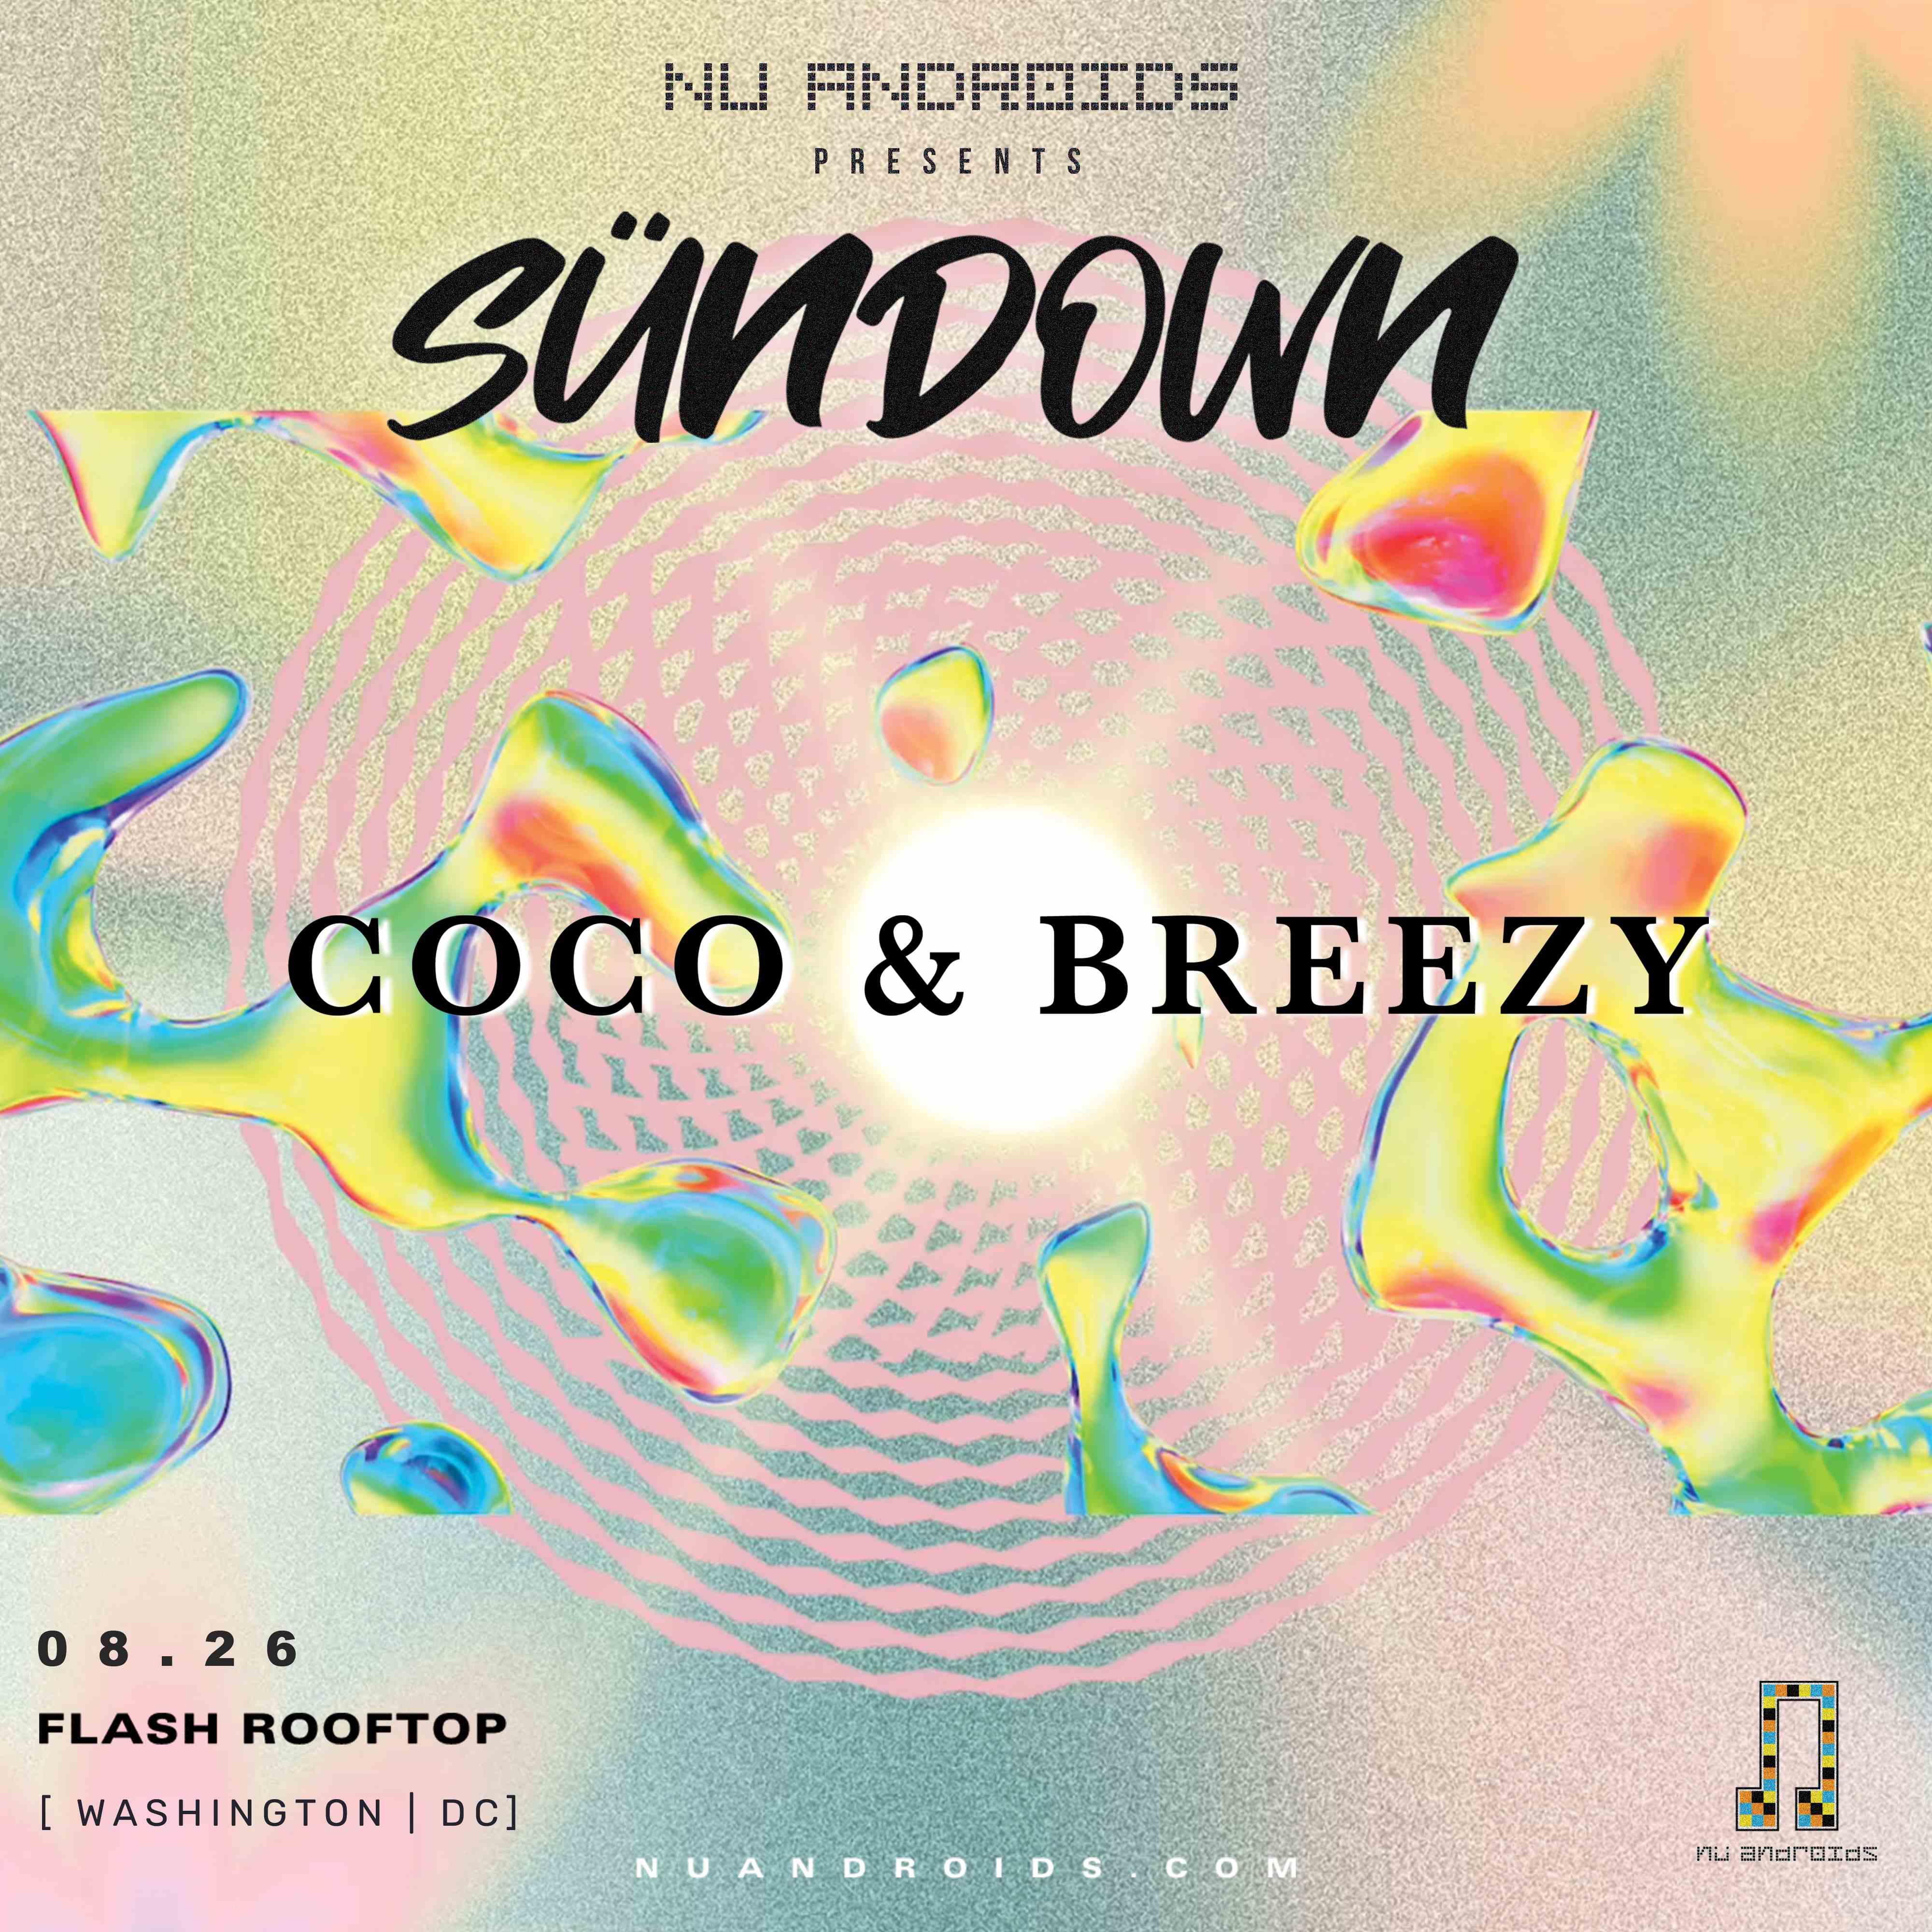 Nü Androids presents SünDown: Coco & Breezy (21+) event flyer